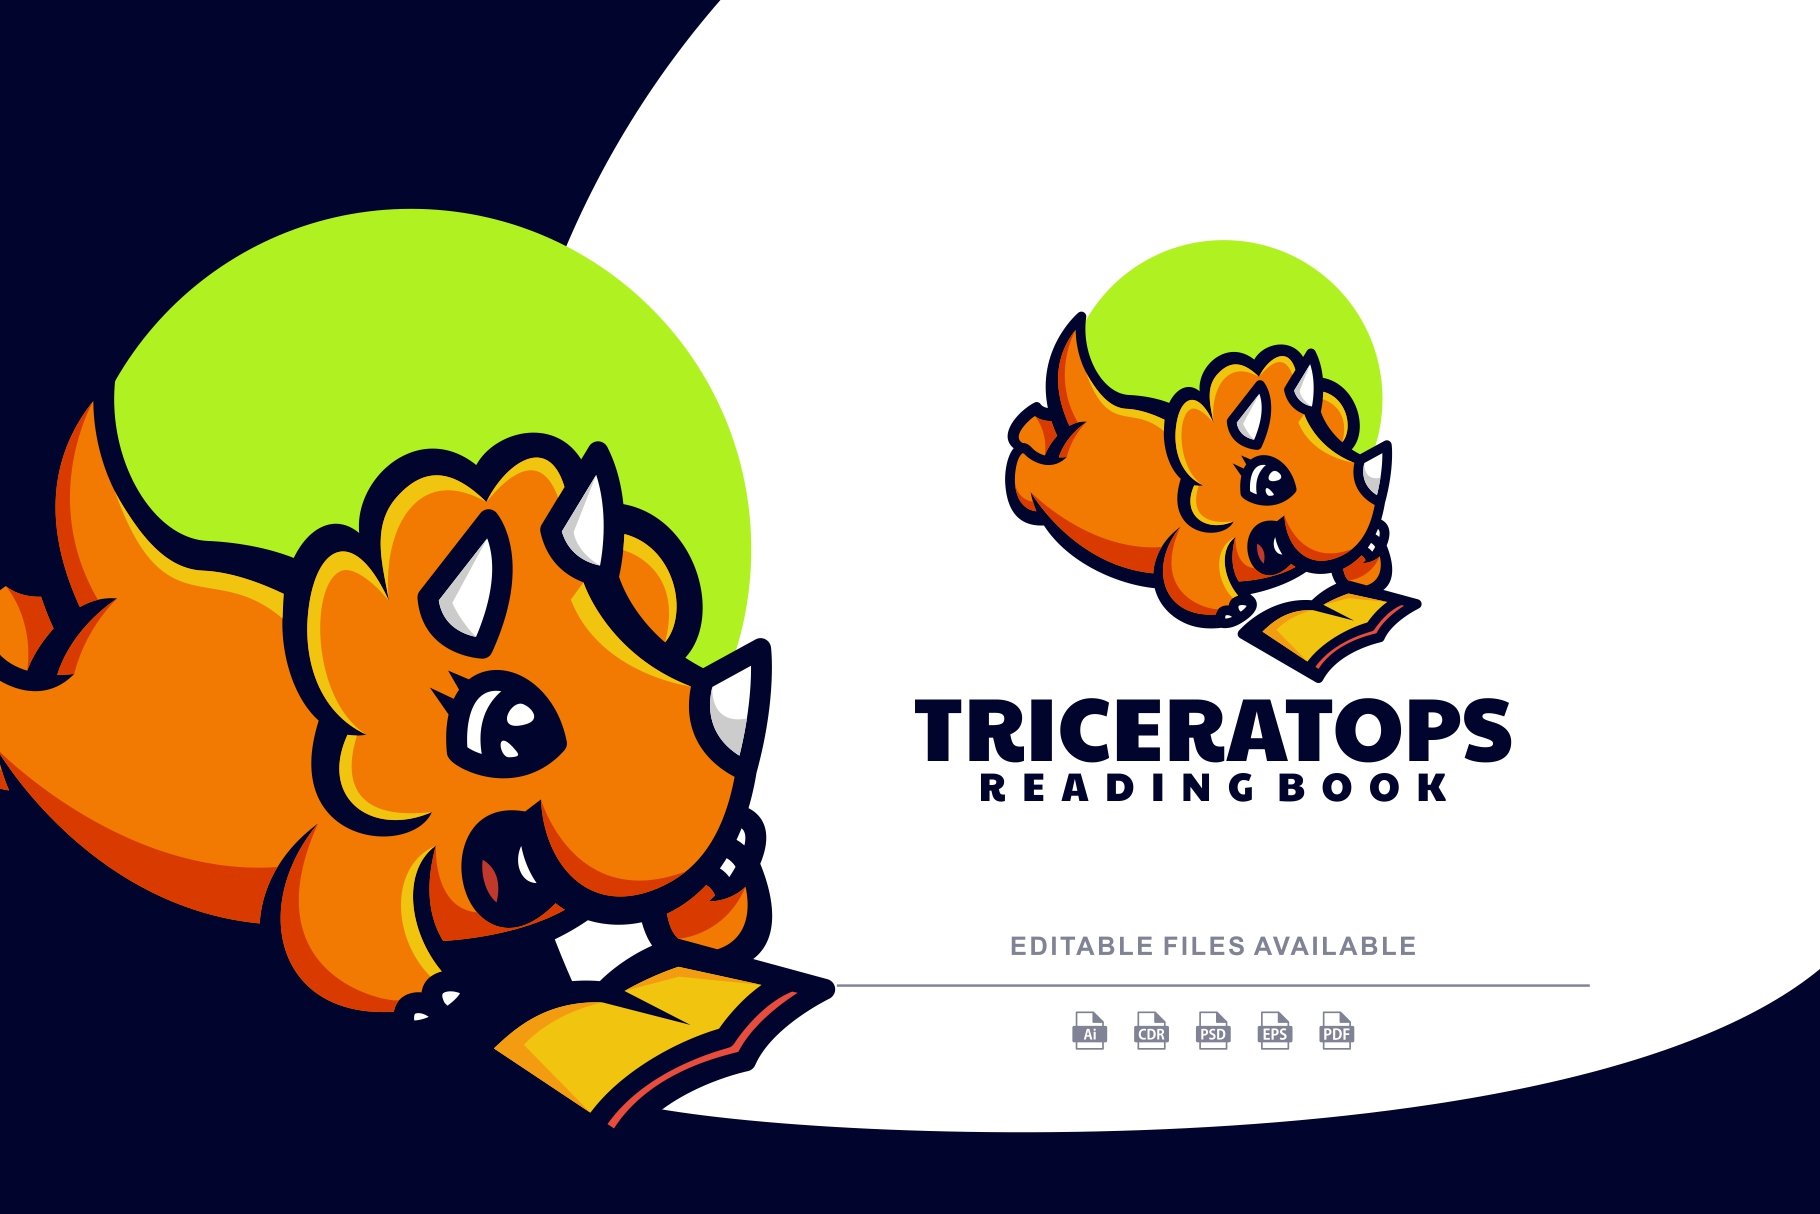 Triceratops Mascot Cartoon Logo cover image.